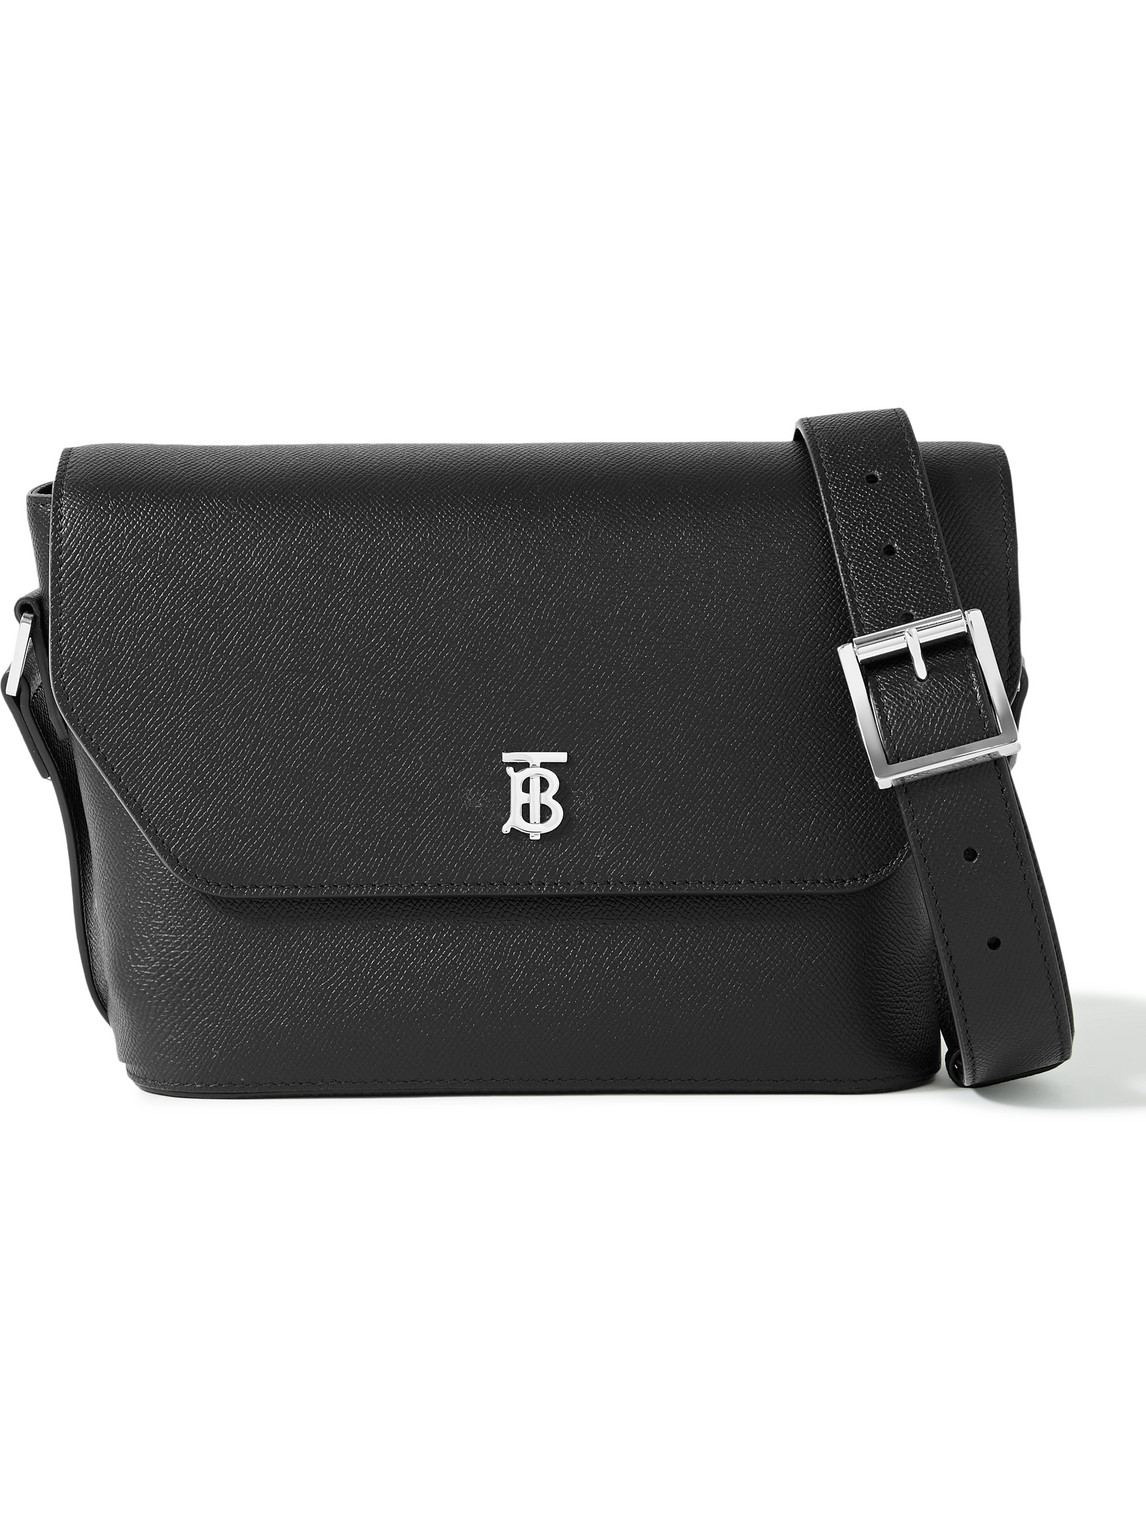 Burberry Leather Tb Monogram Messenger Bag In Black